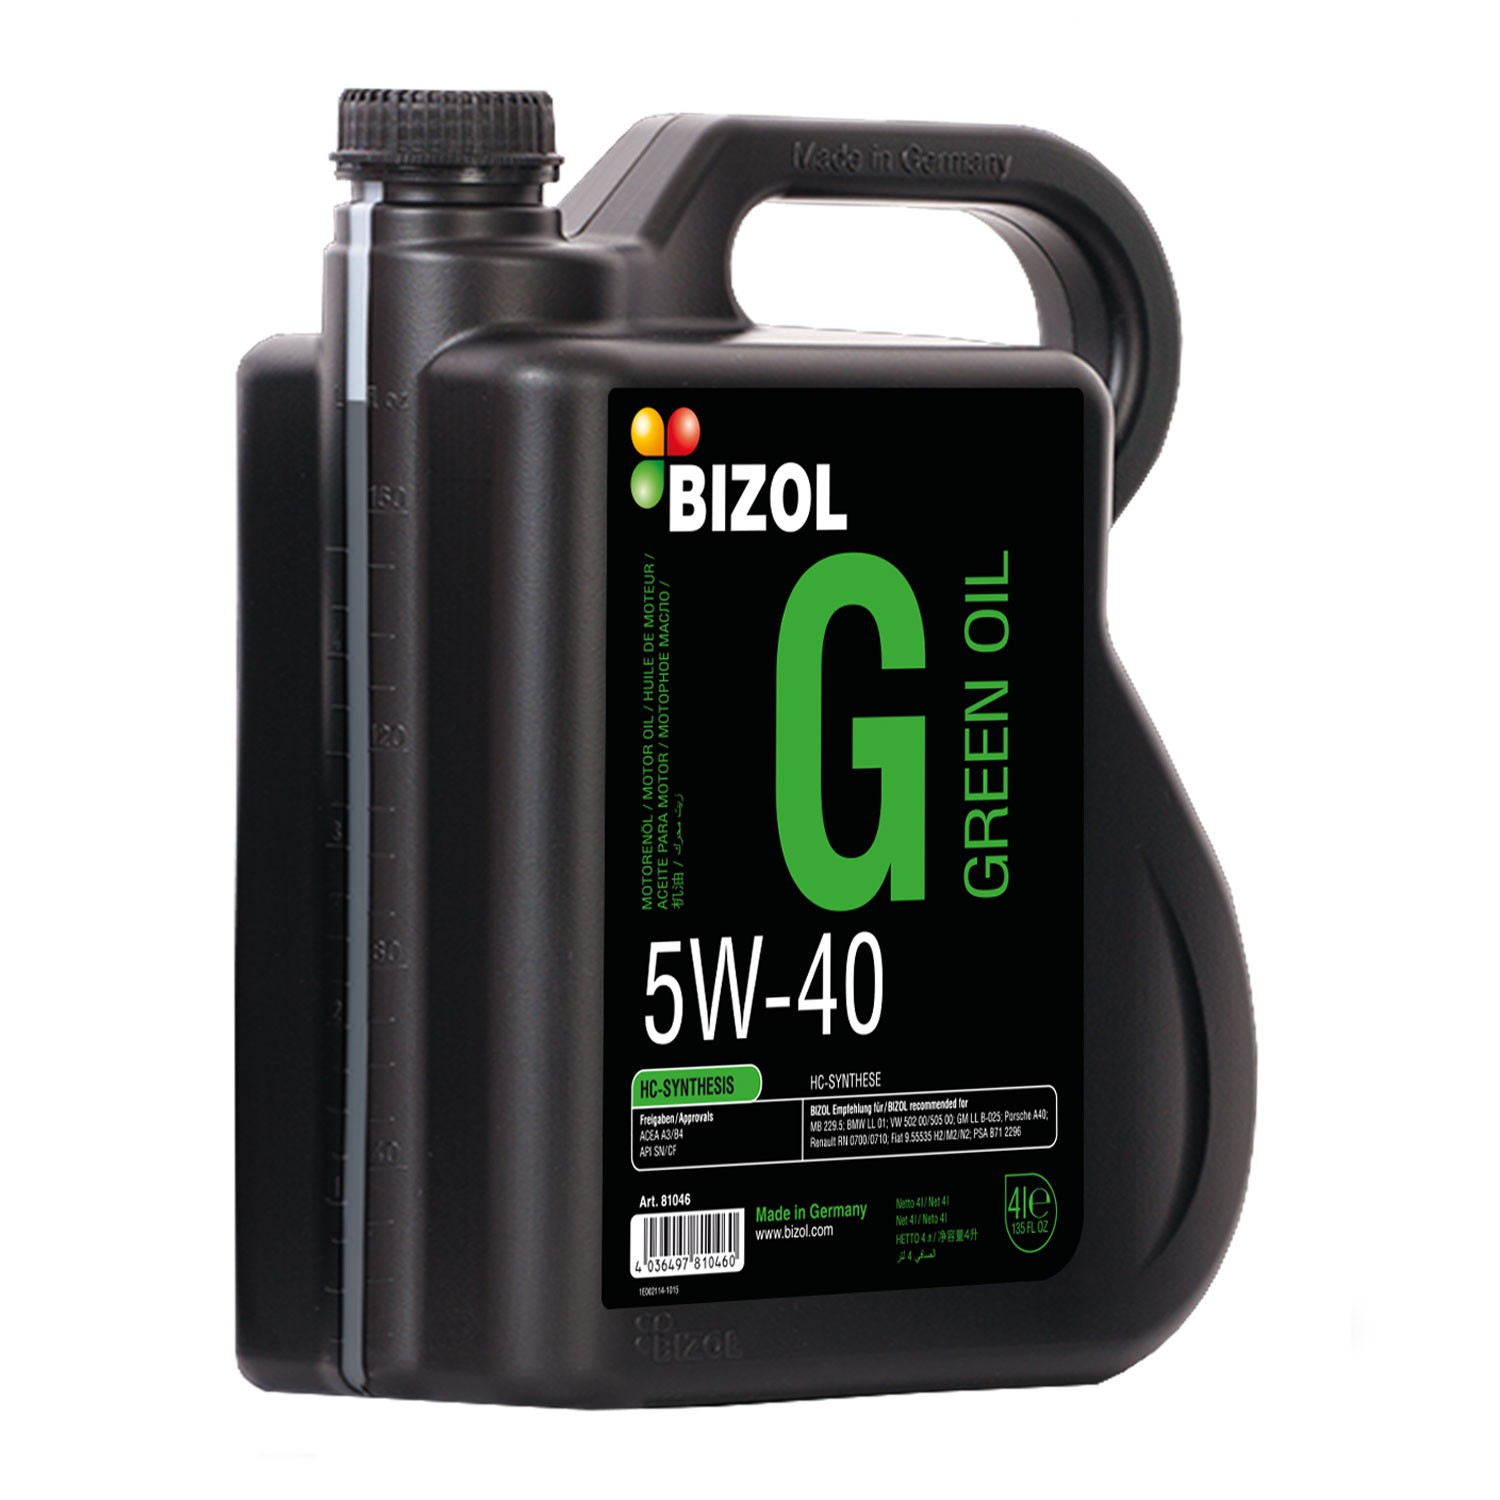 BIZOL Green Oil 5W-40